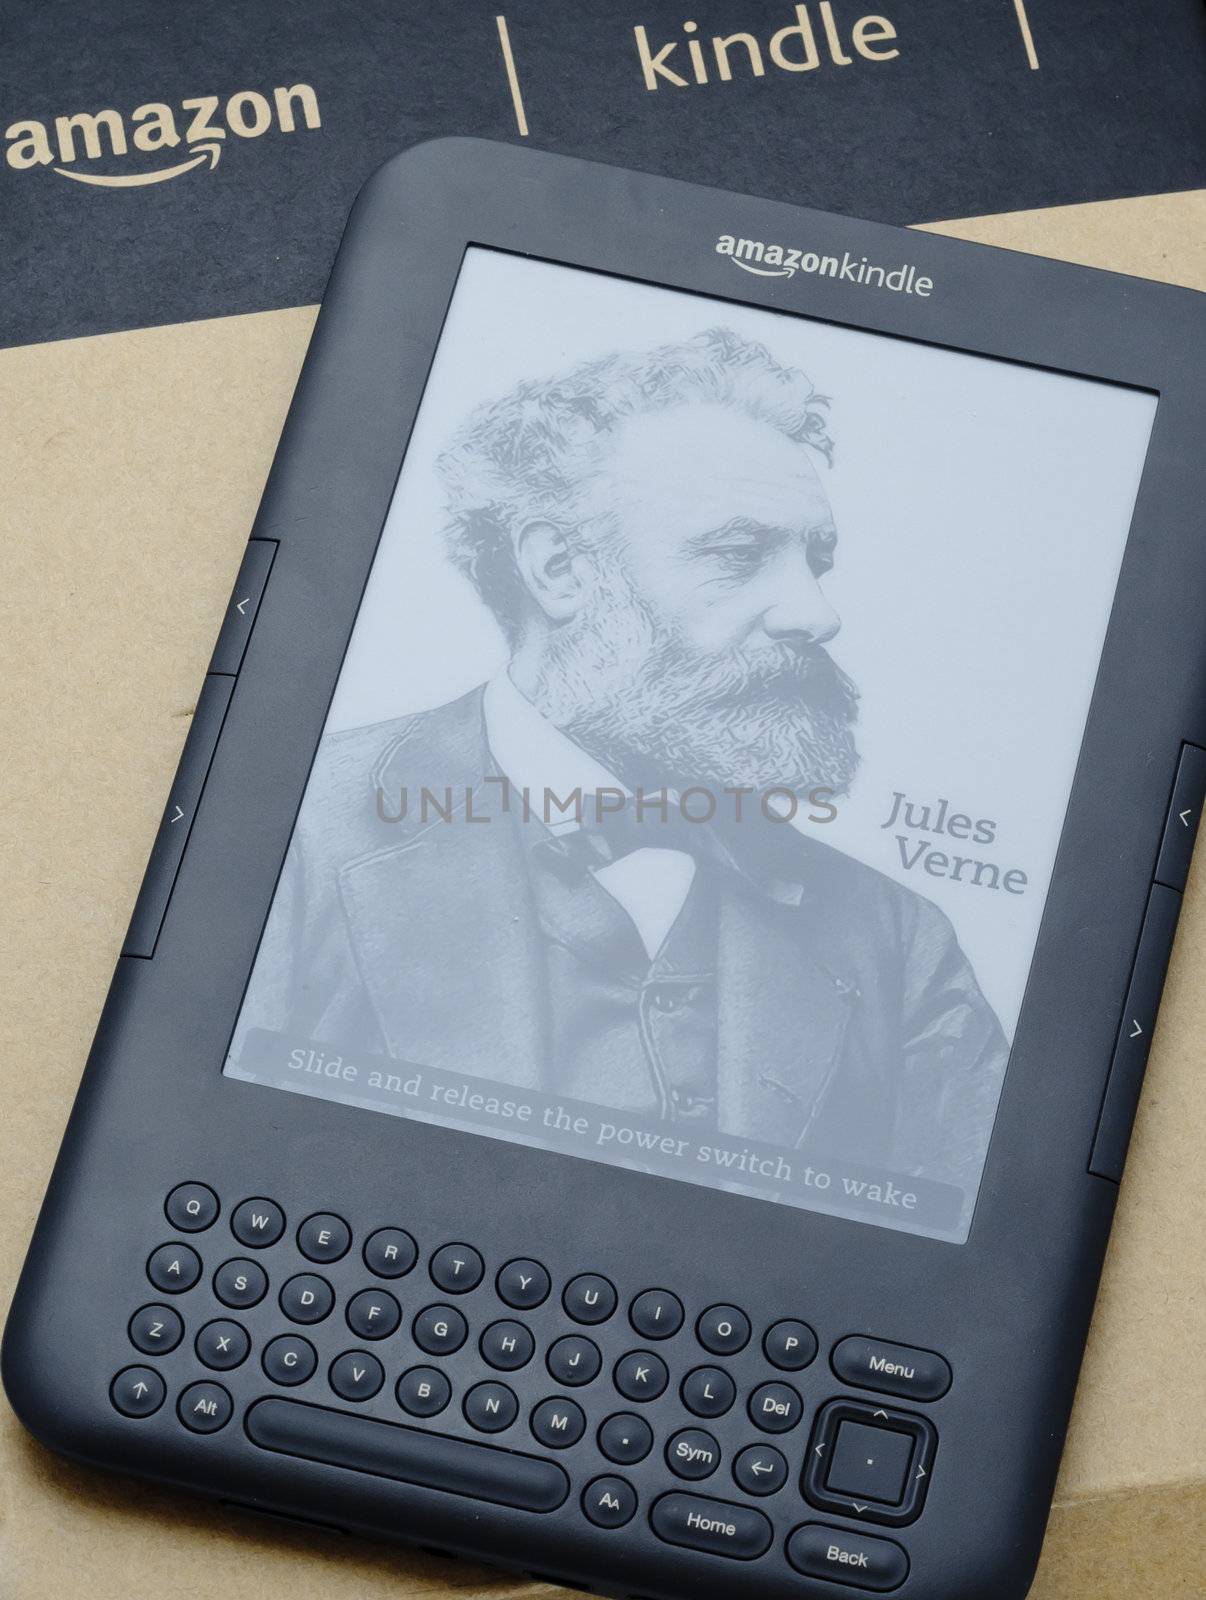 Amazon Kindle 3 ebook reader on its original box